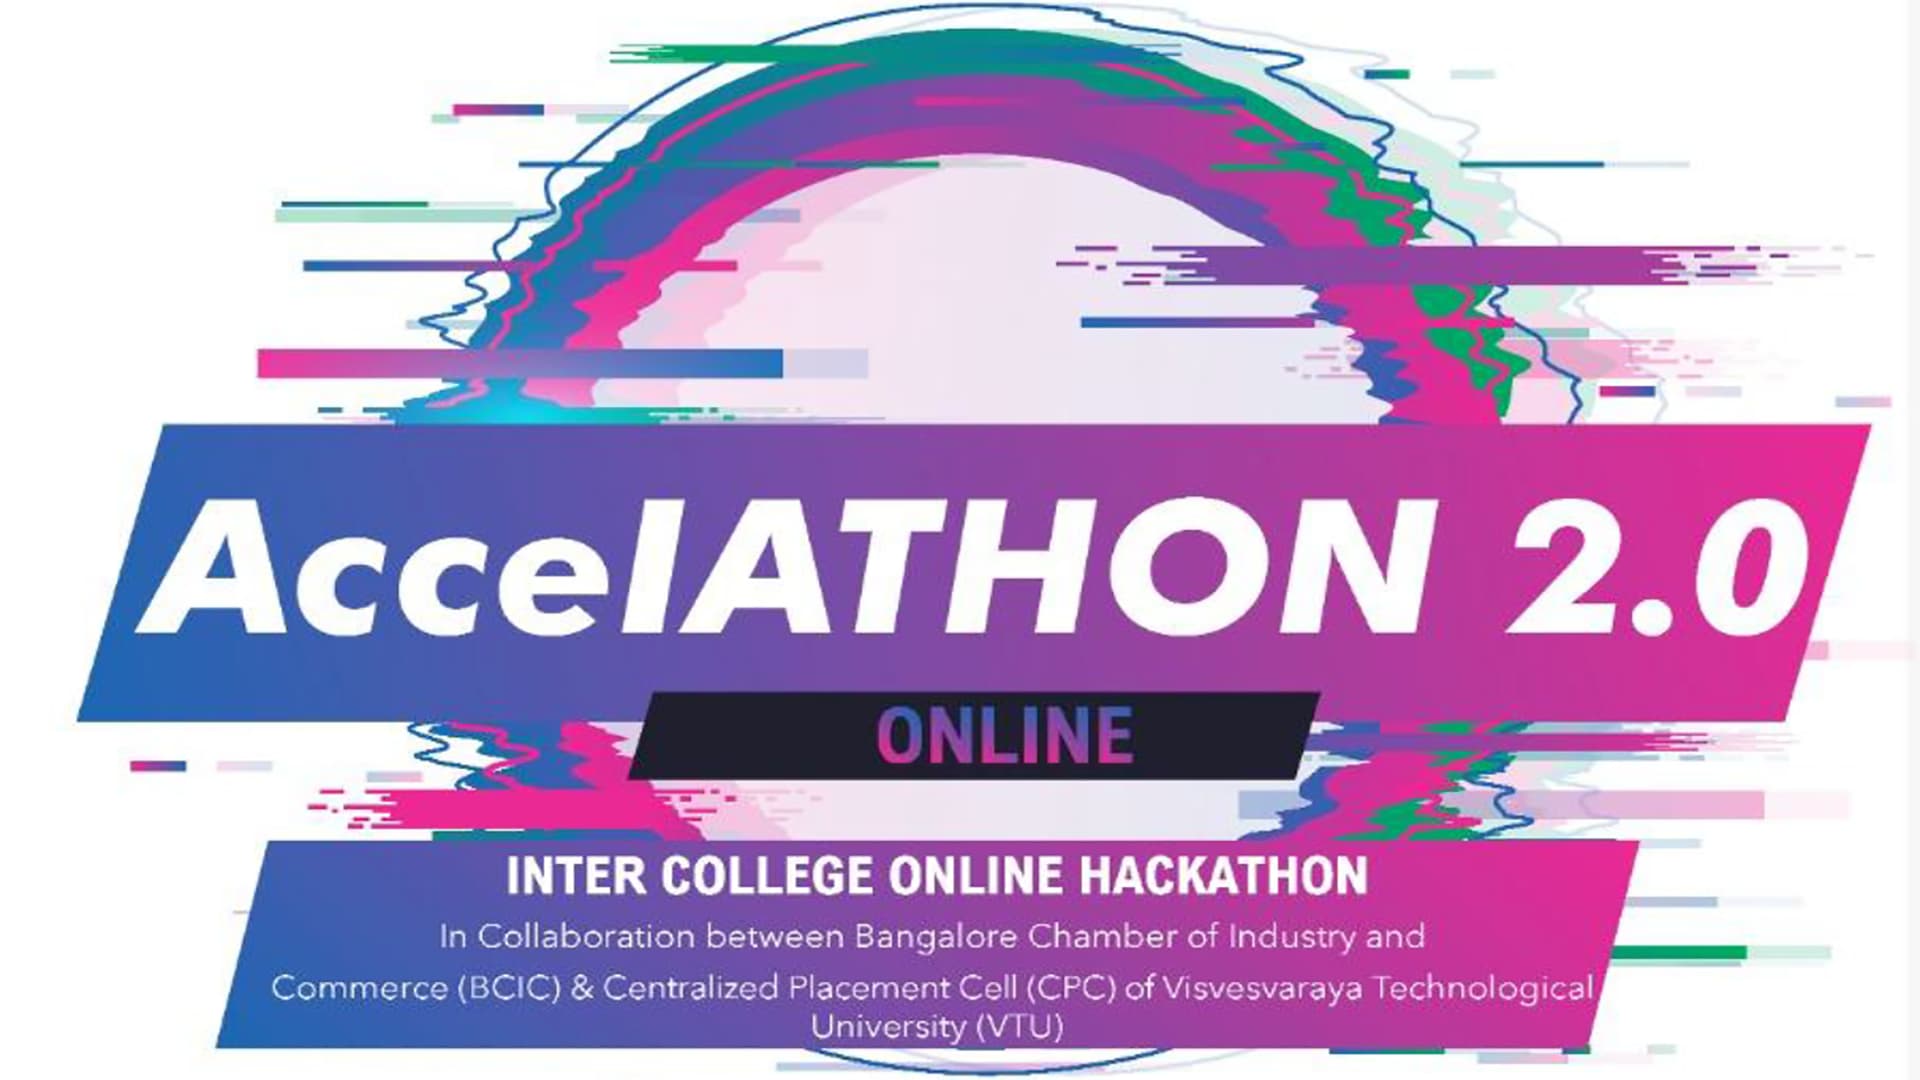 VTU Online Hackathon 2020- AccelATHON 2.0